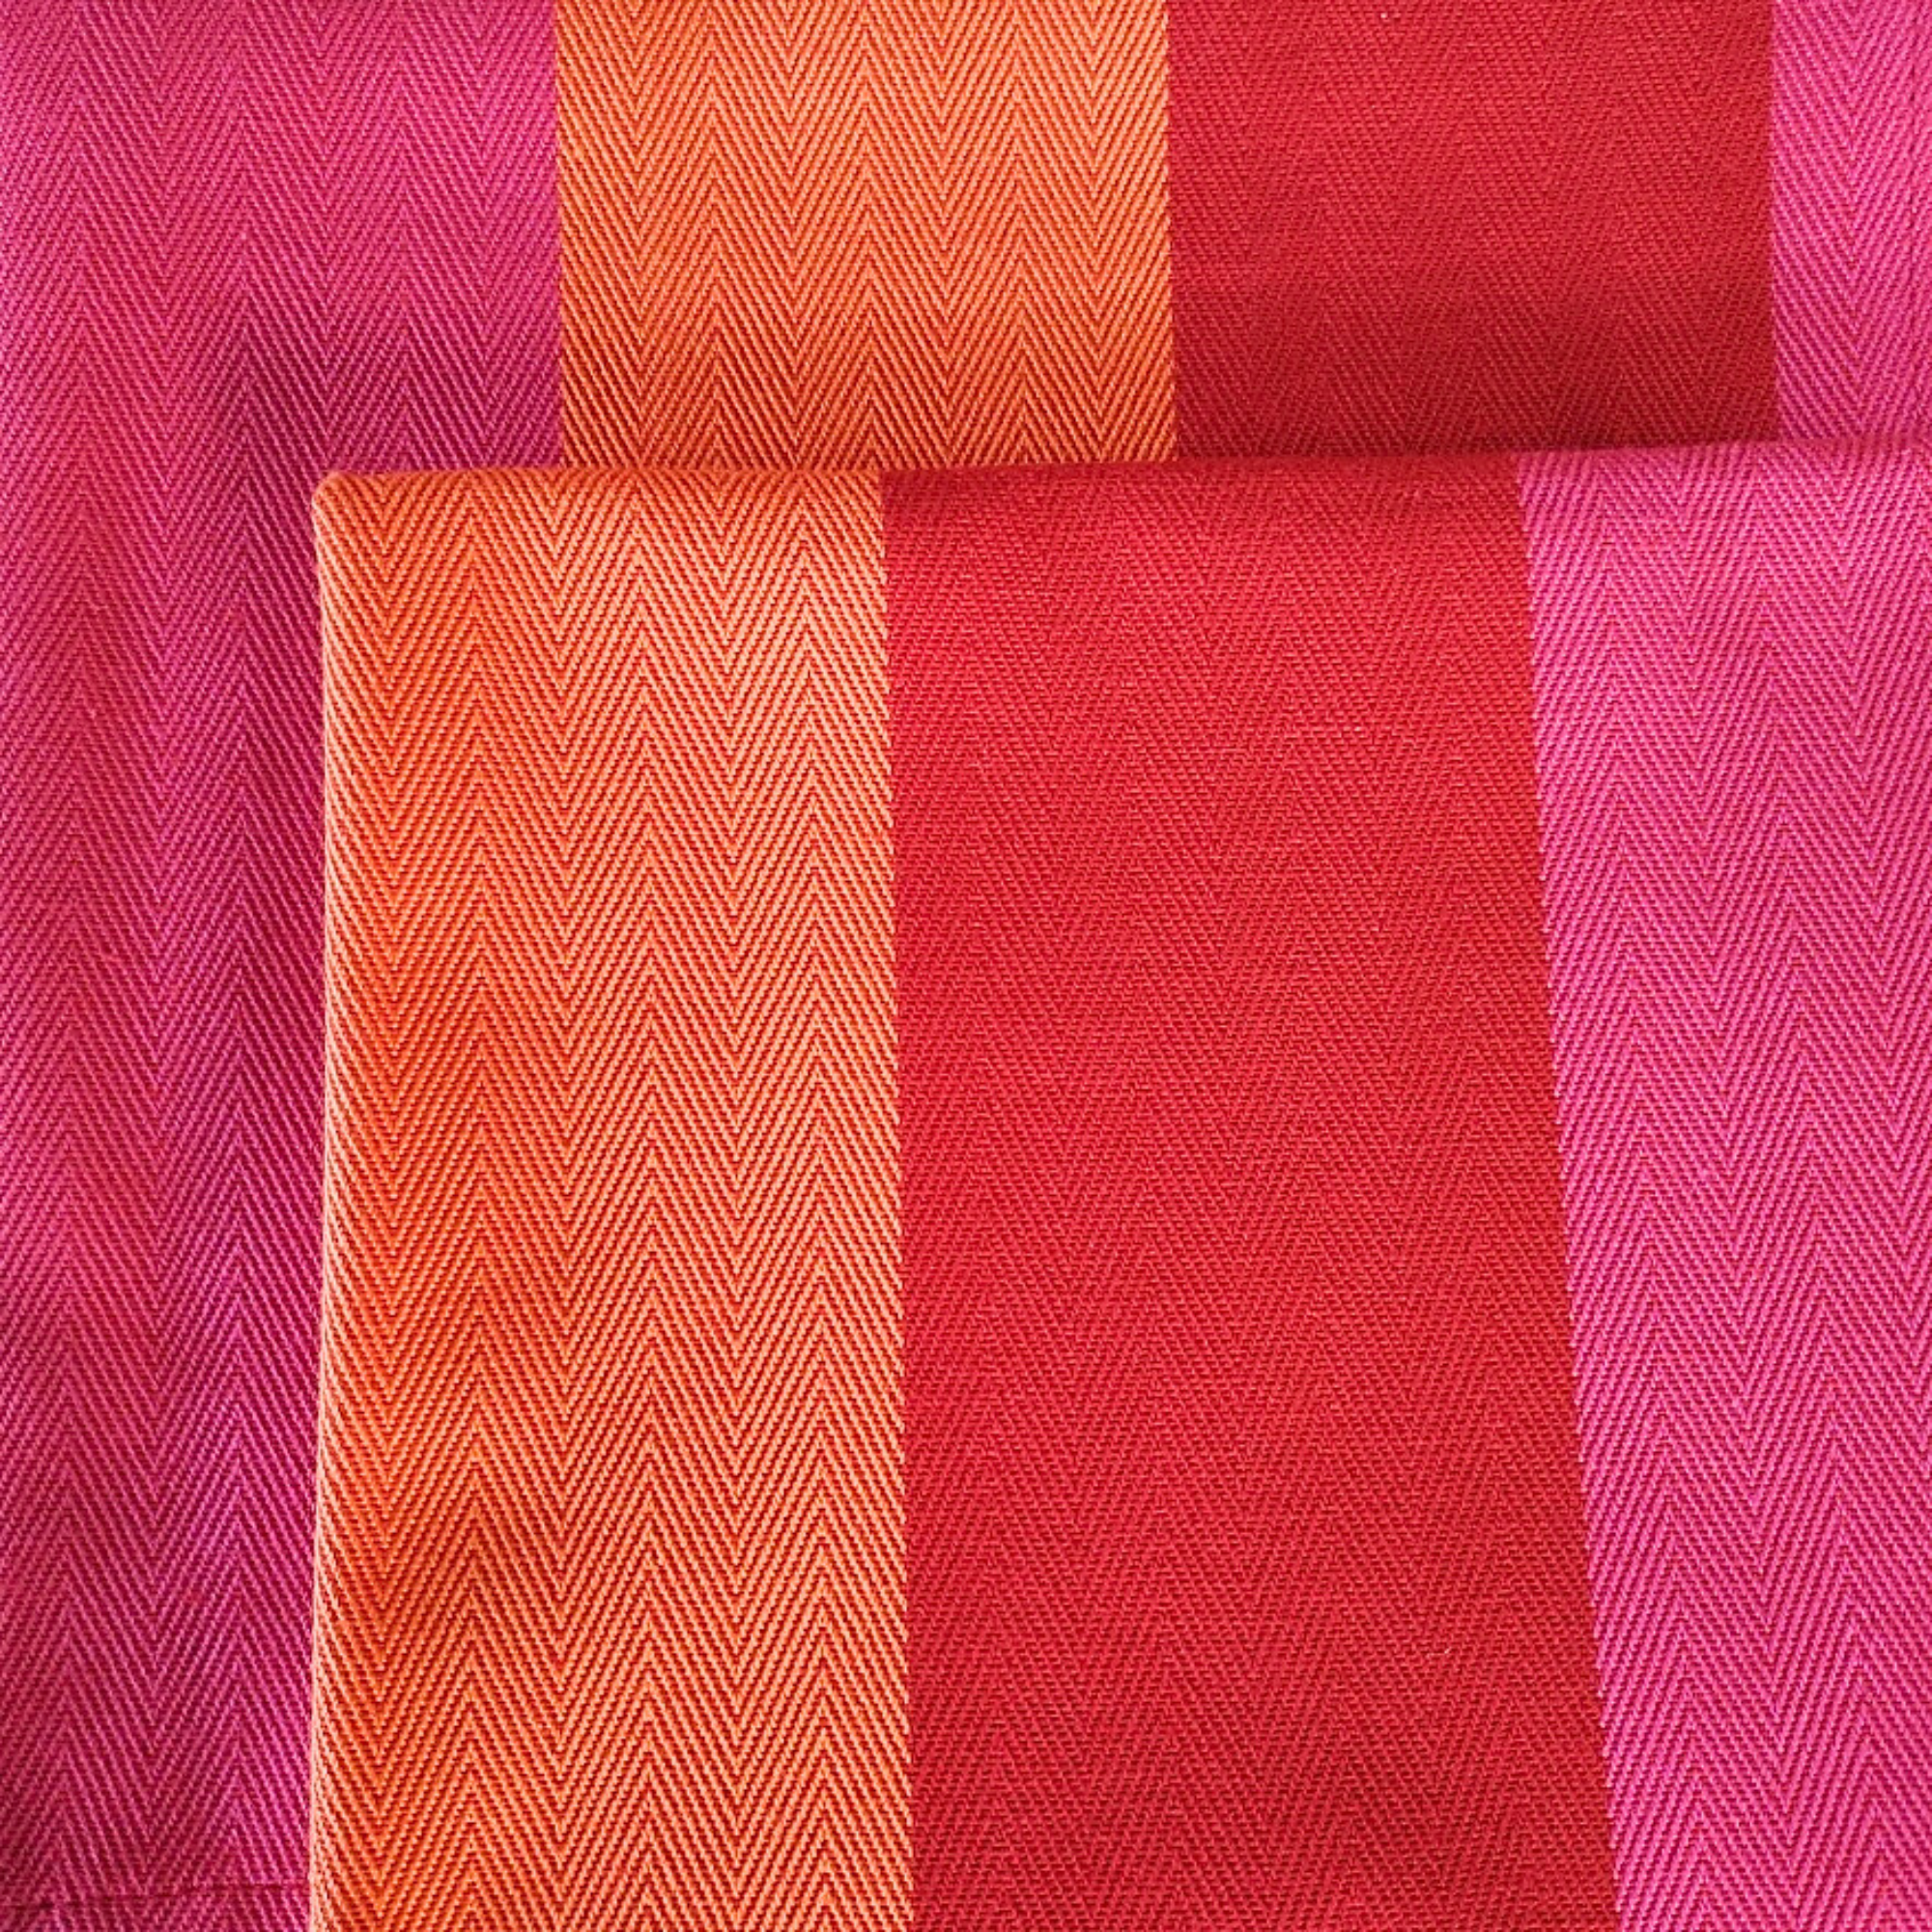 red orange pink napkins close up folded above each other